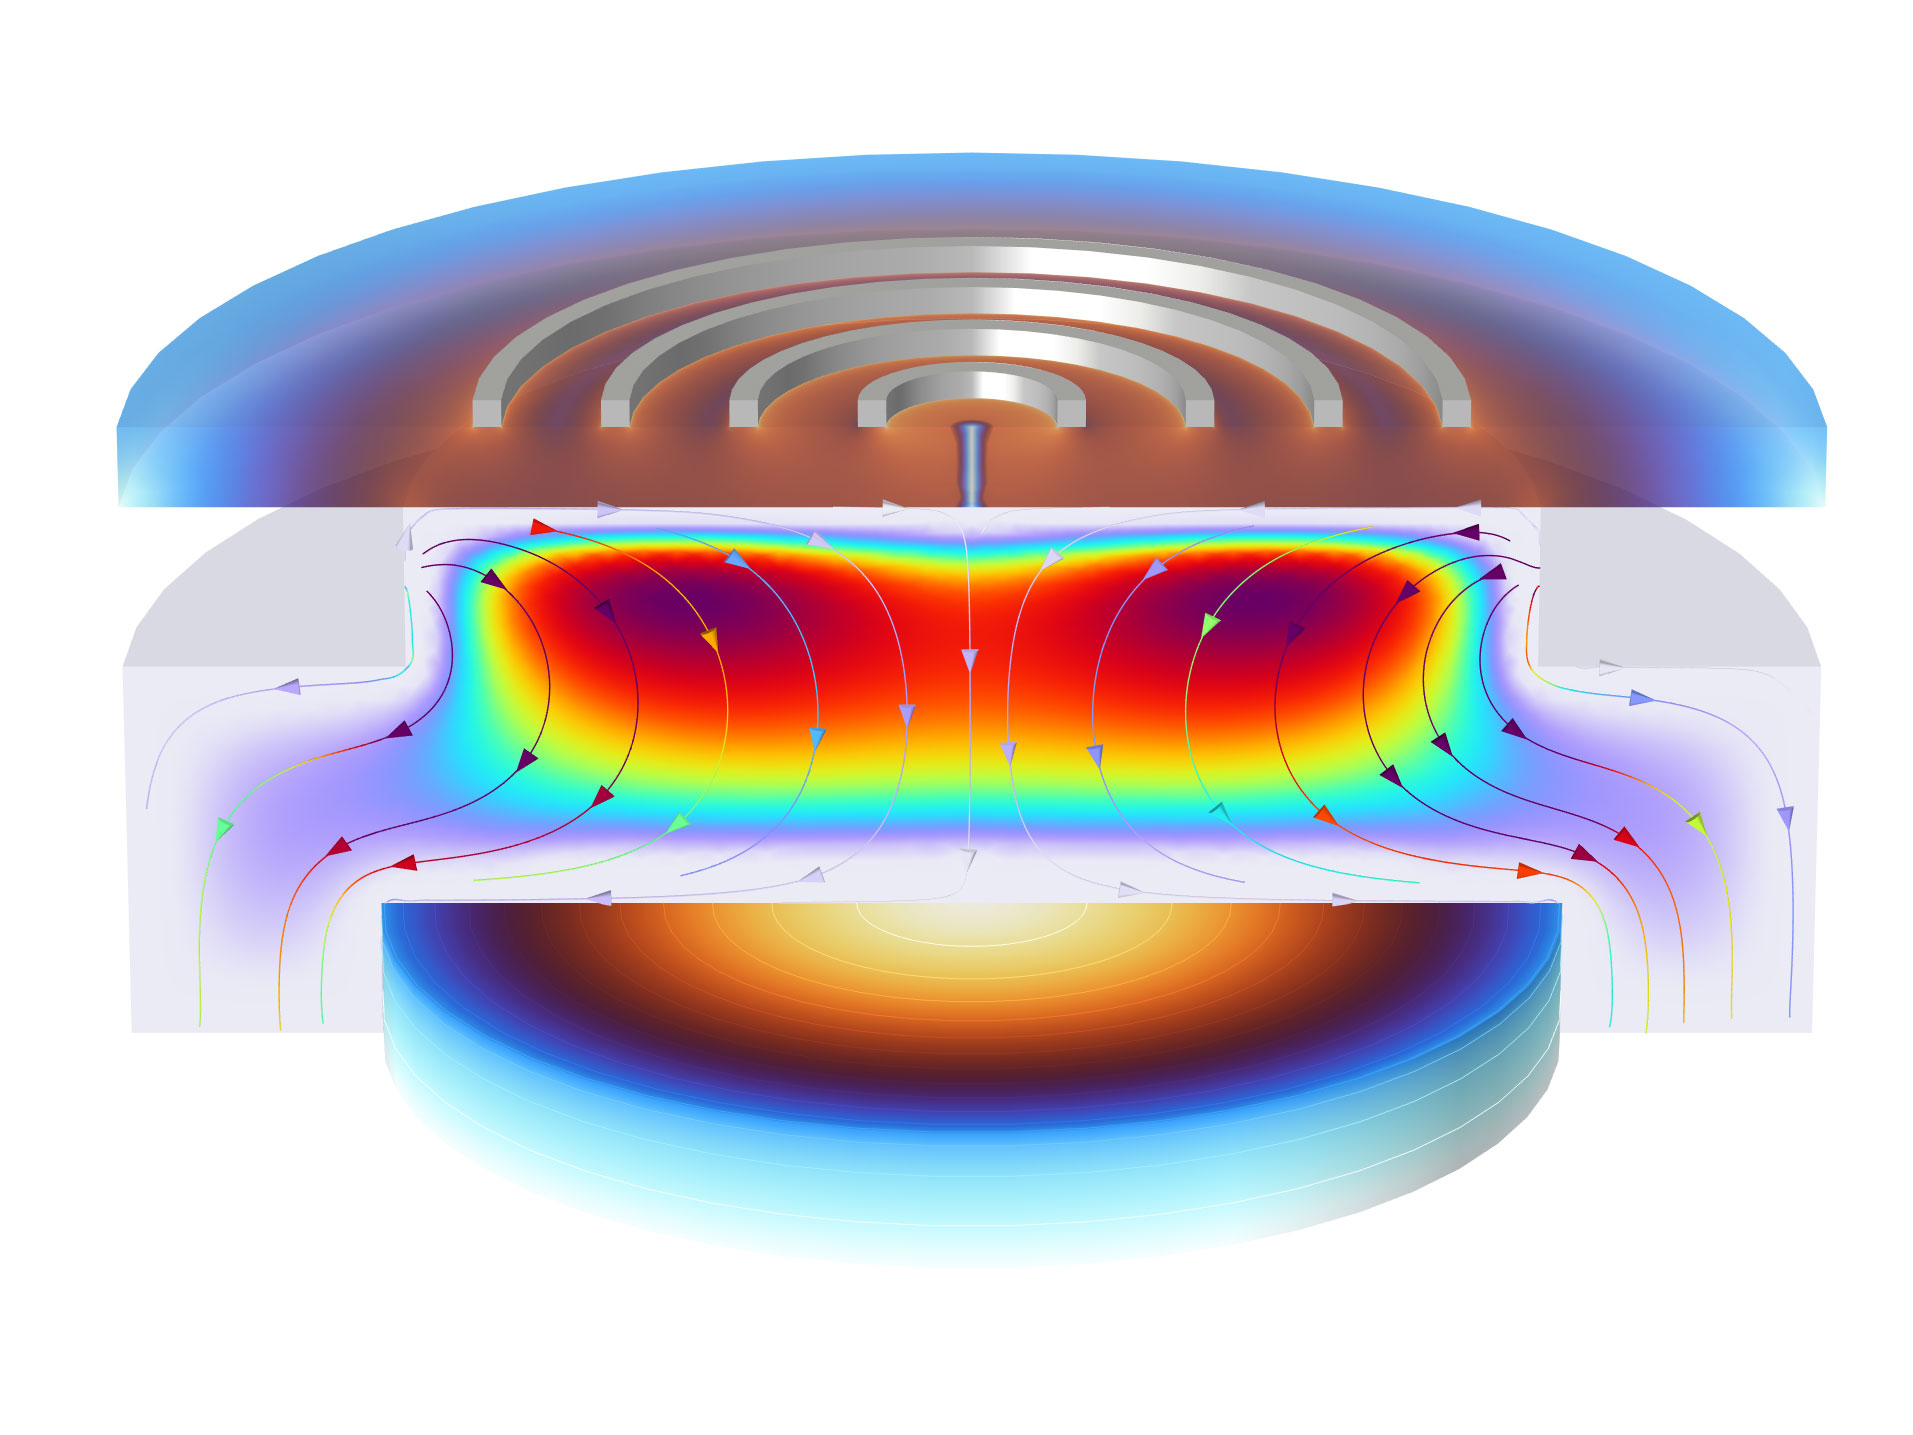 以 Thermal Wave 和 Prism 颜色表显示的反应器模型。